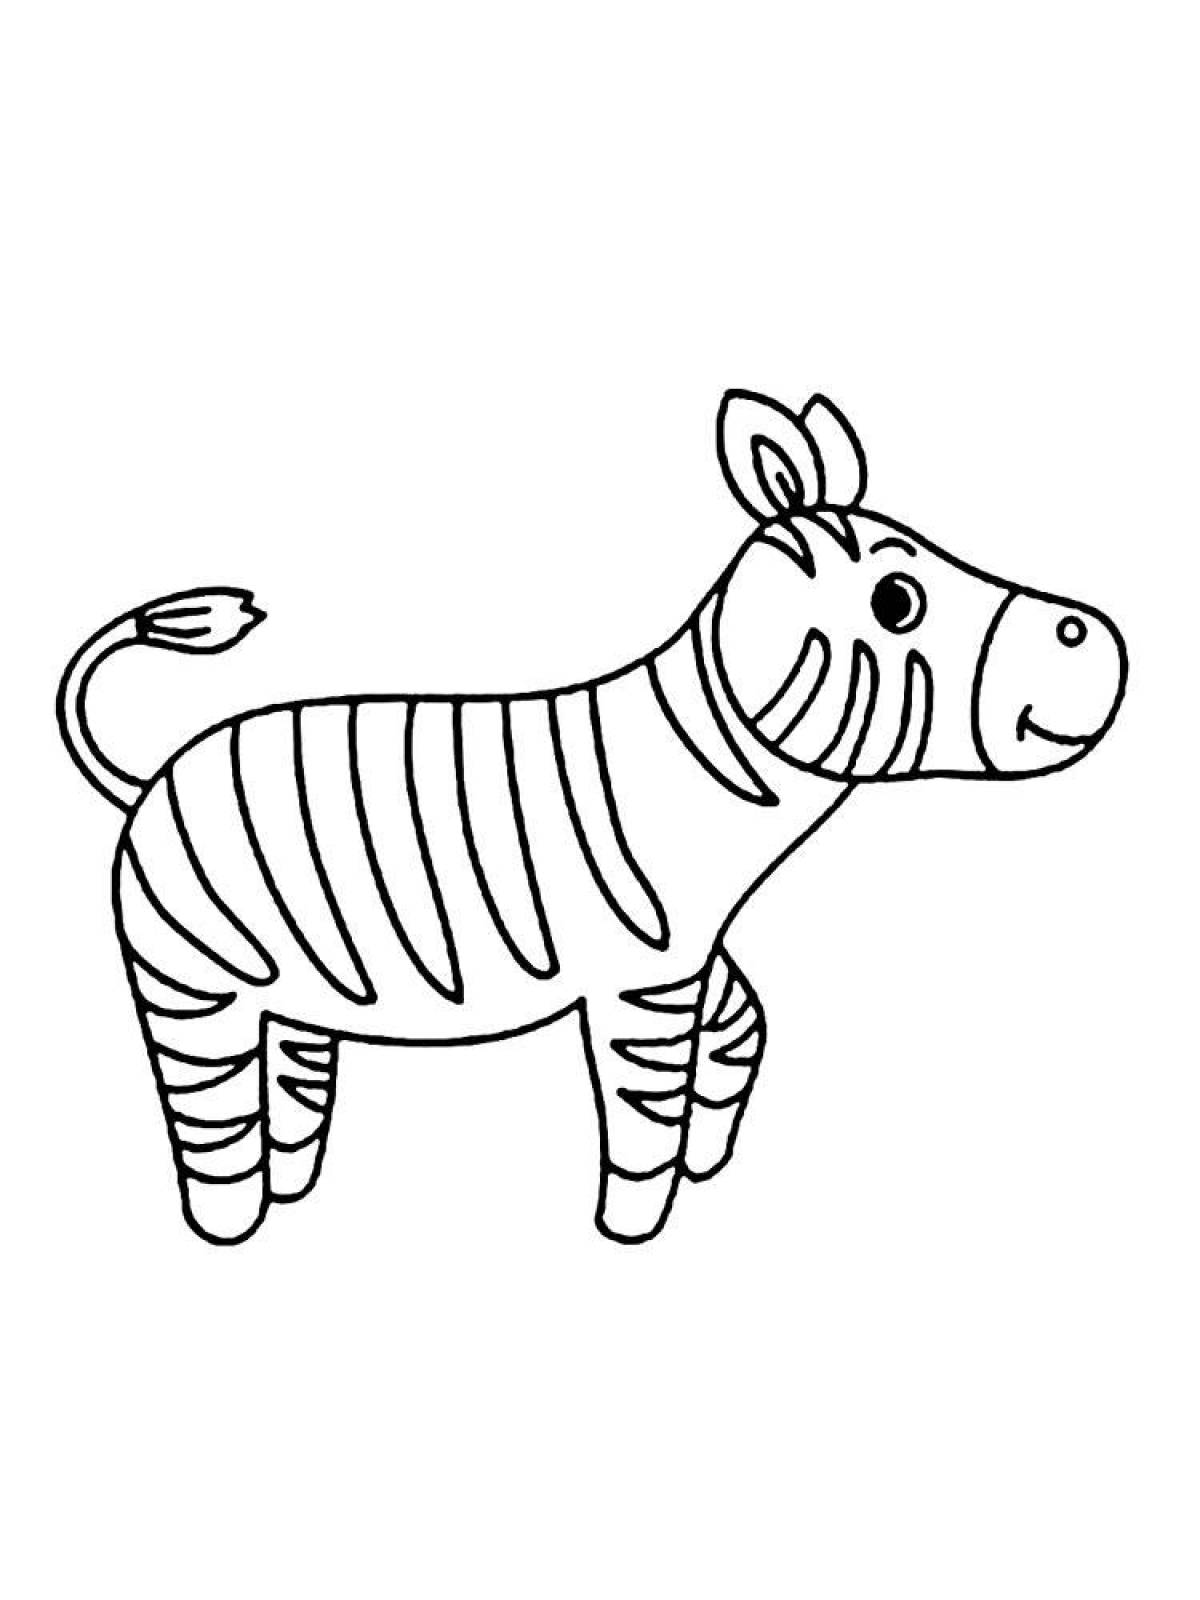 Color-brilliant zebra coloring page for children